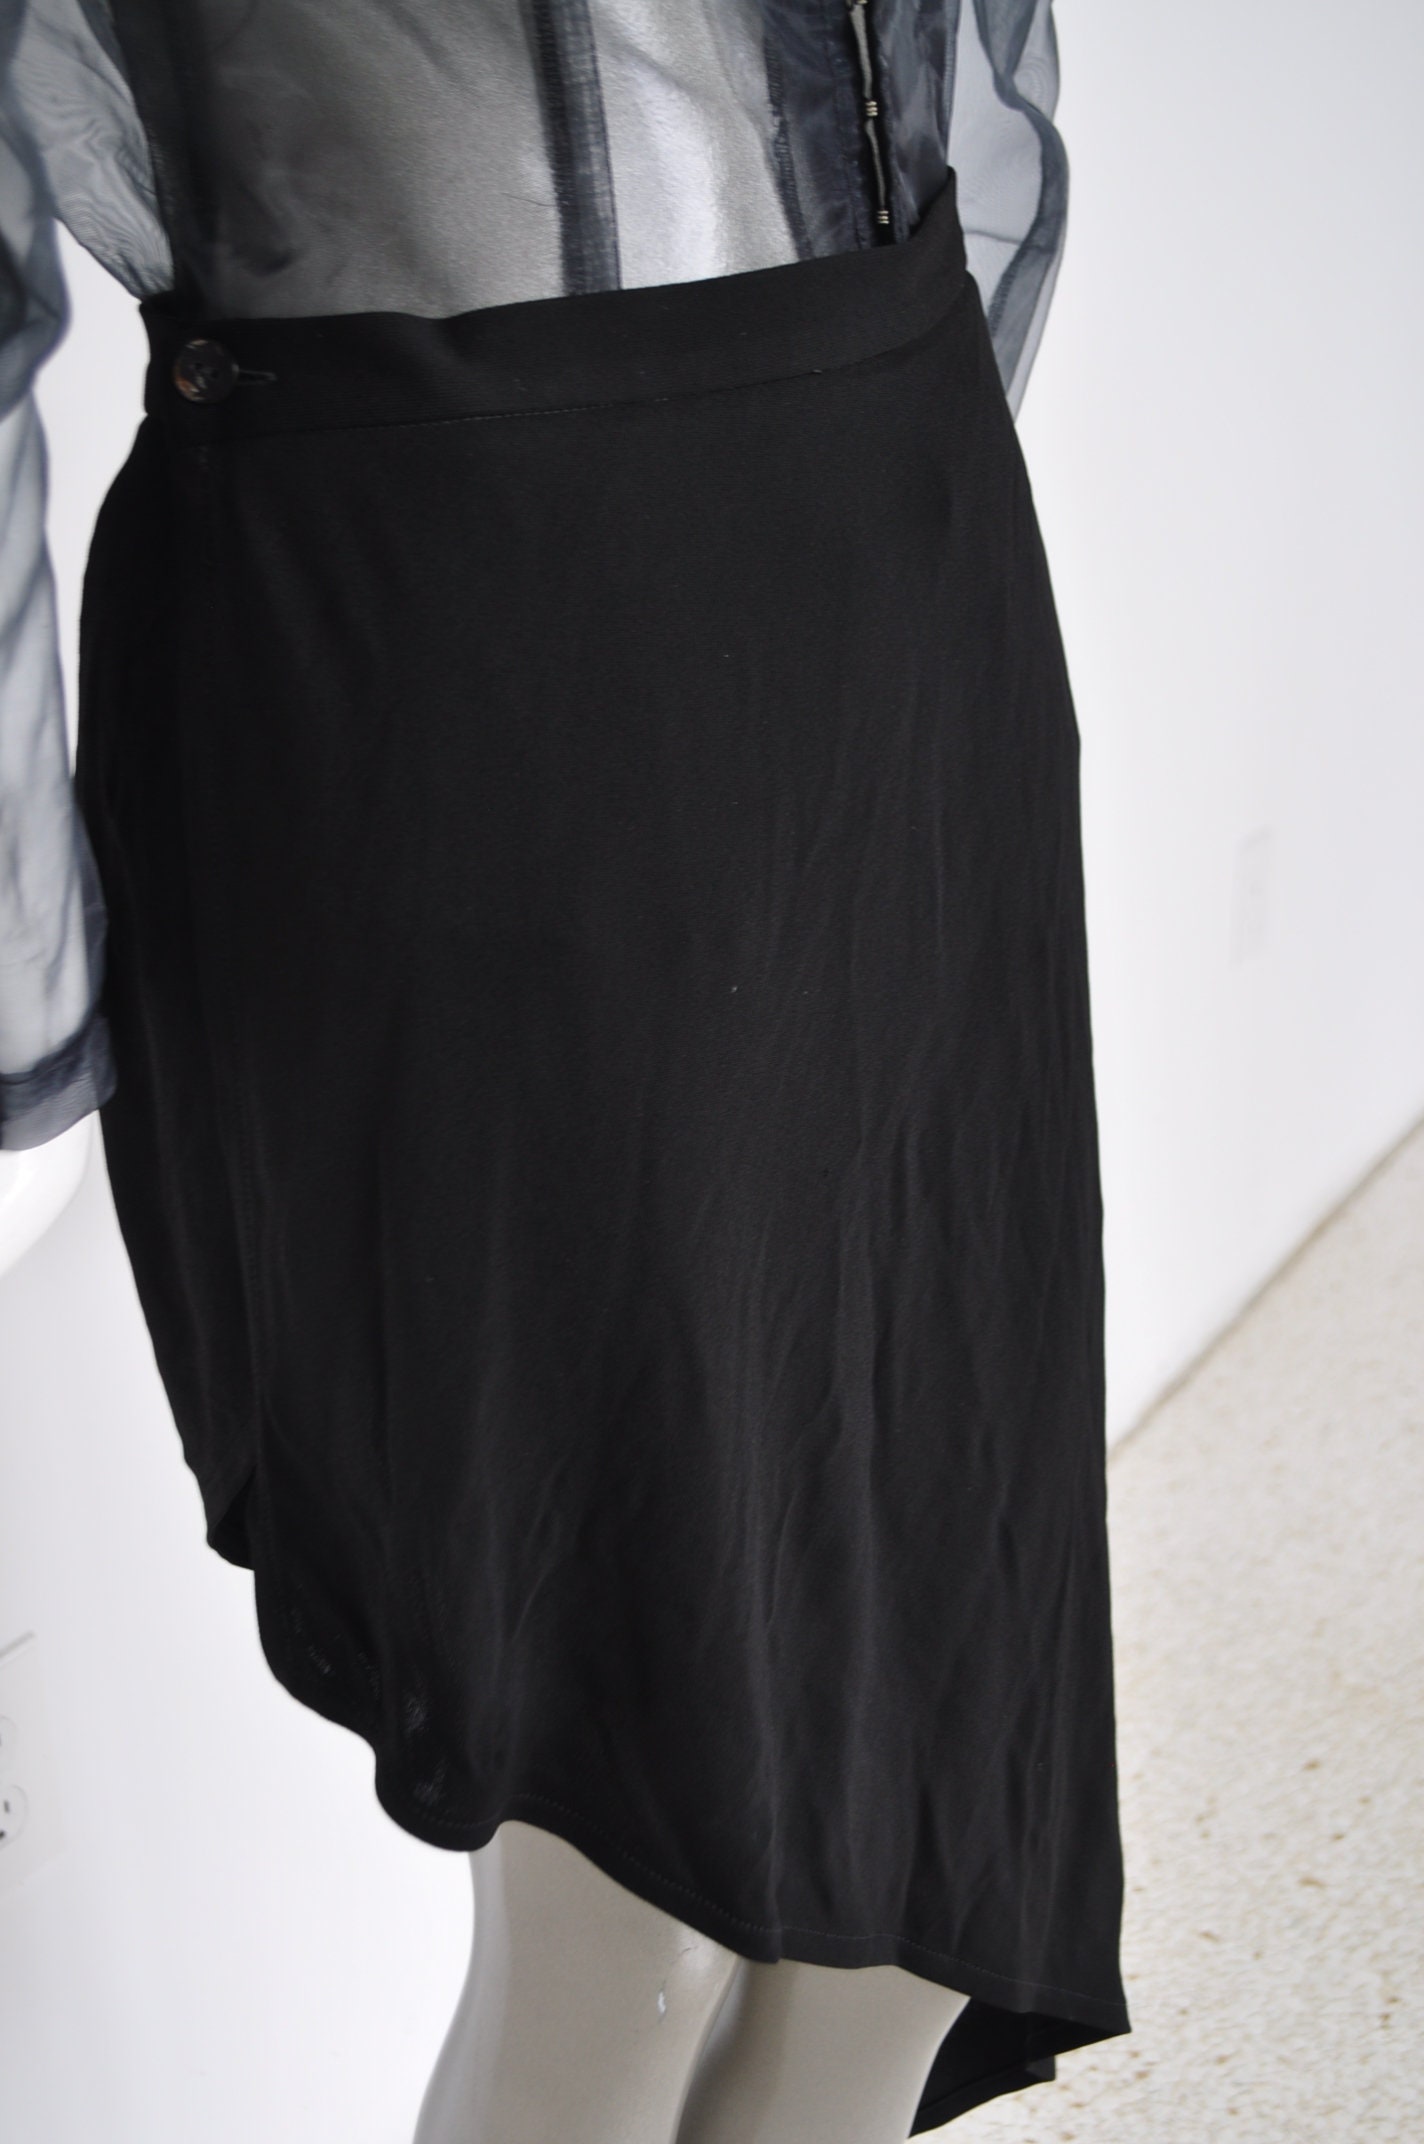 Lolita Lempicka PARIS Skirt From the 90s - Etsy